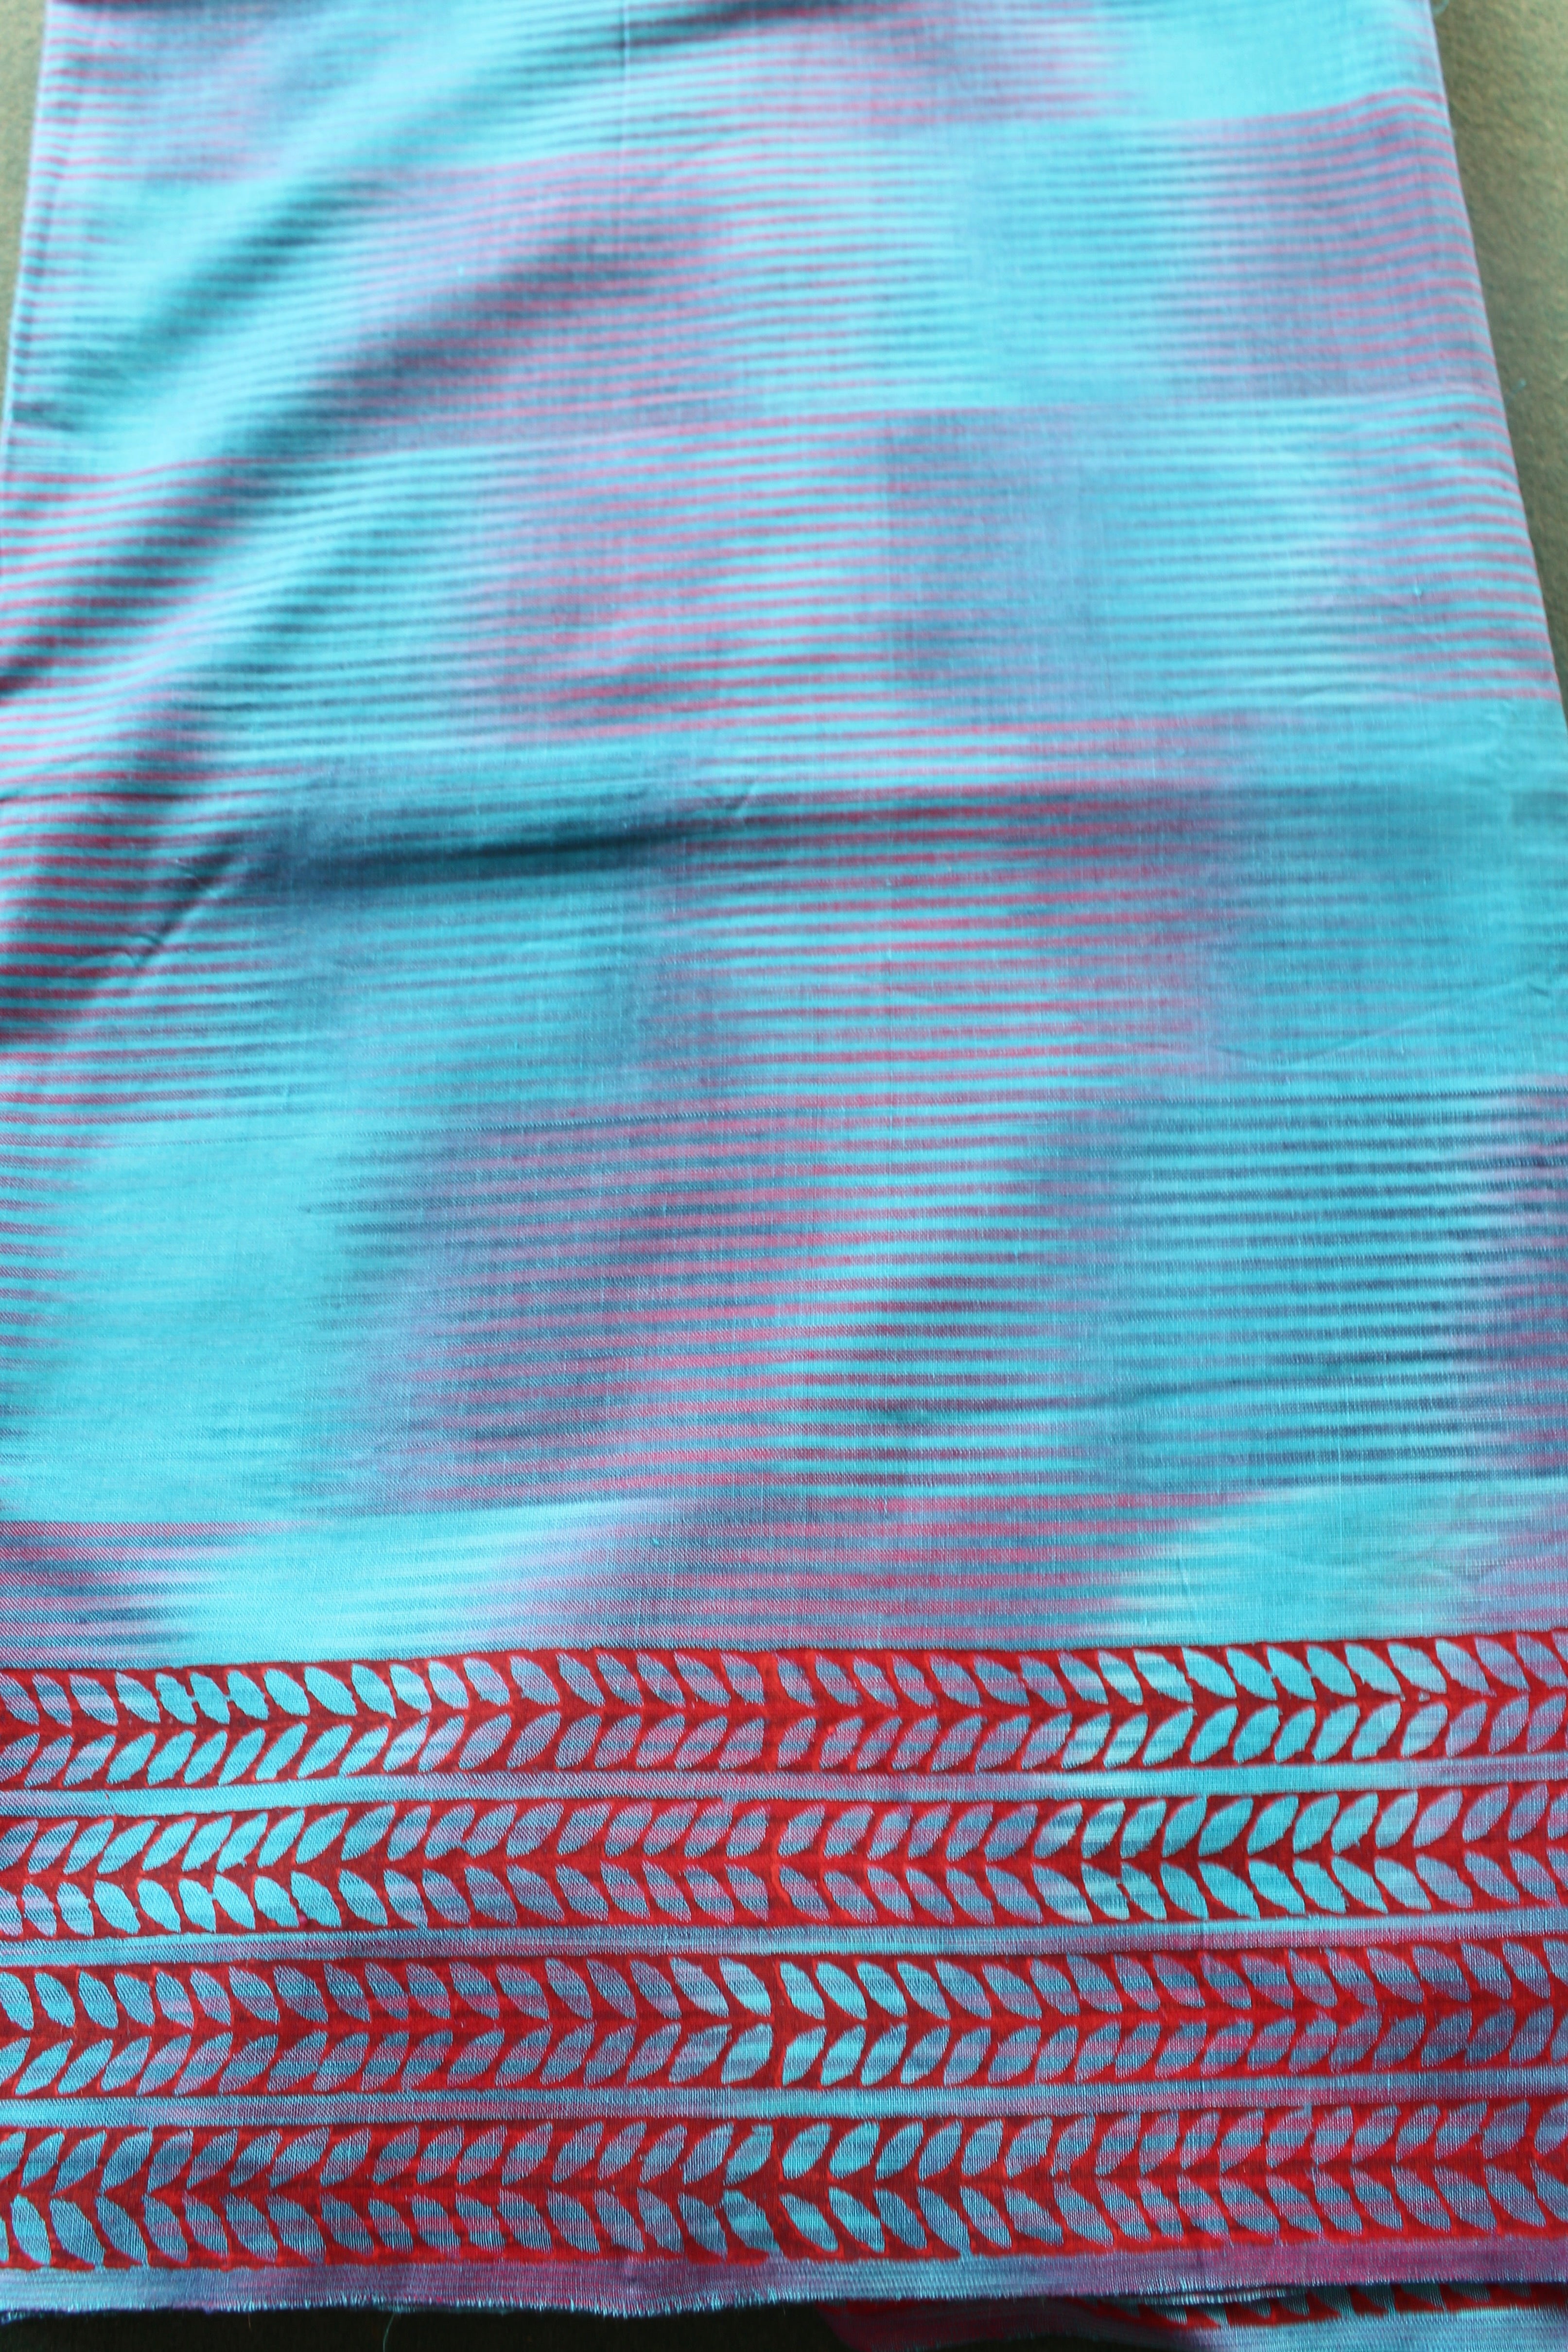 Handloom blouse fabric